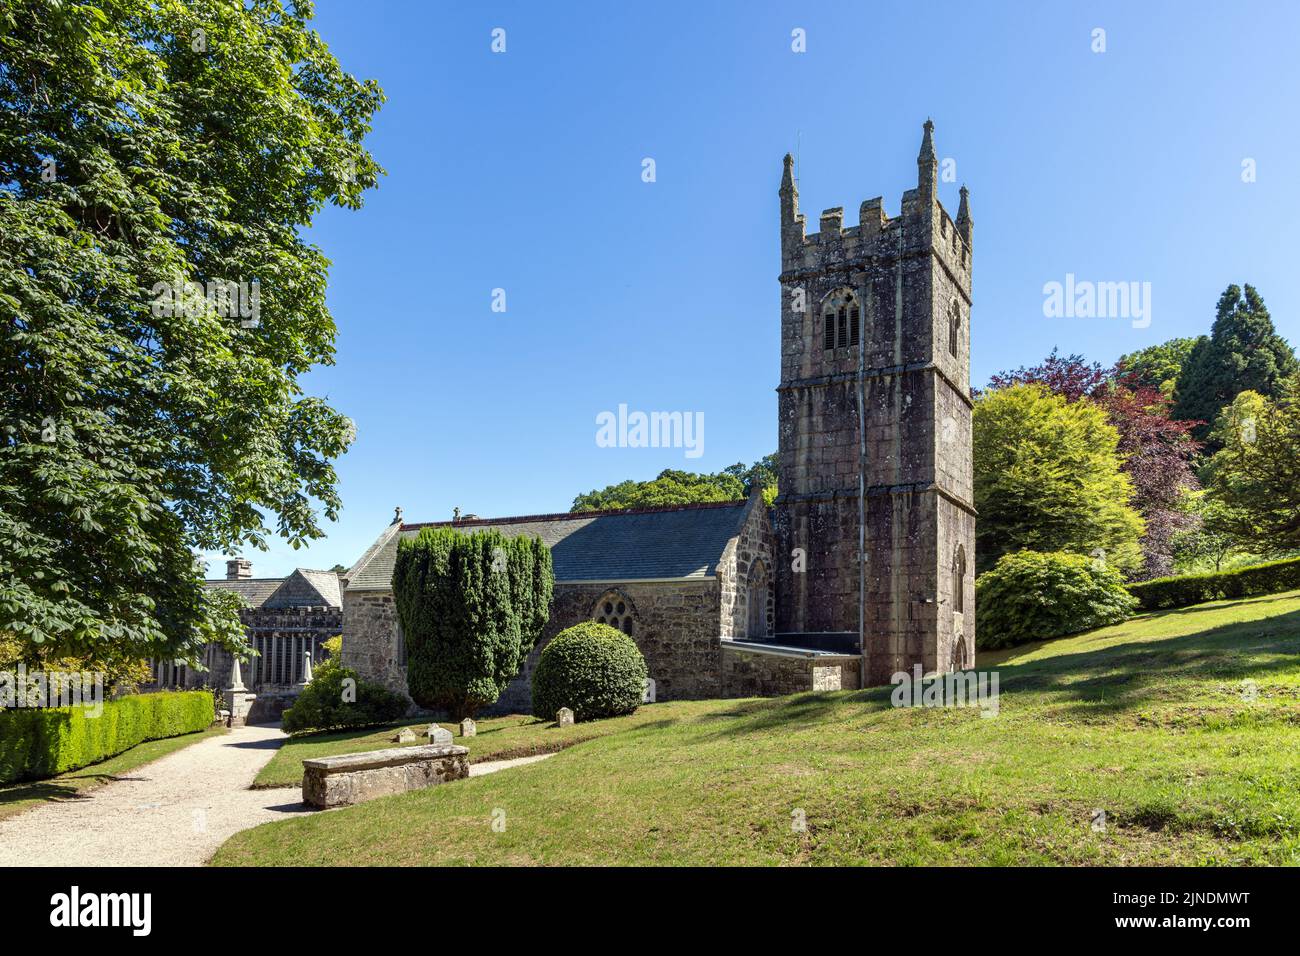 St hydroc's Church, Lanhydrock Parish Church, Cornovaglia, vicino a Bodmin, Inghilterra Foto Stock